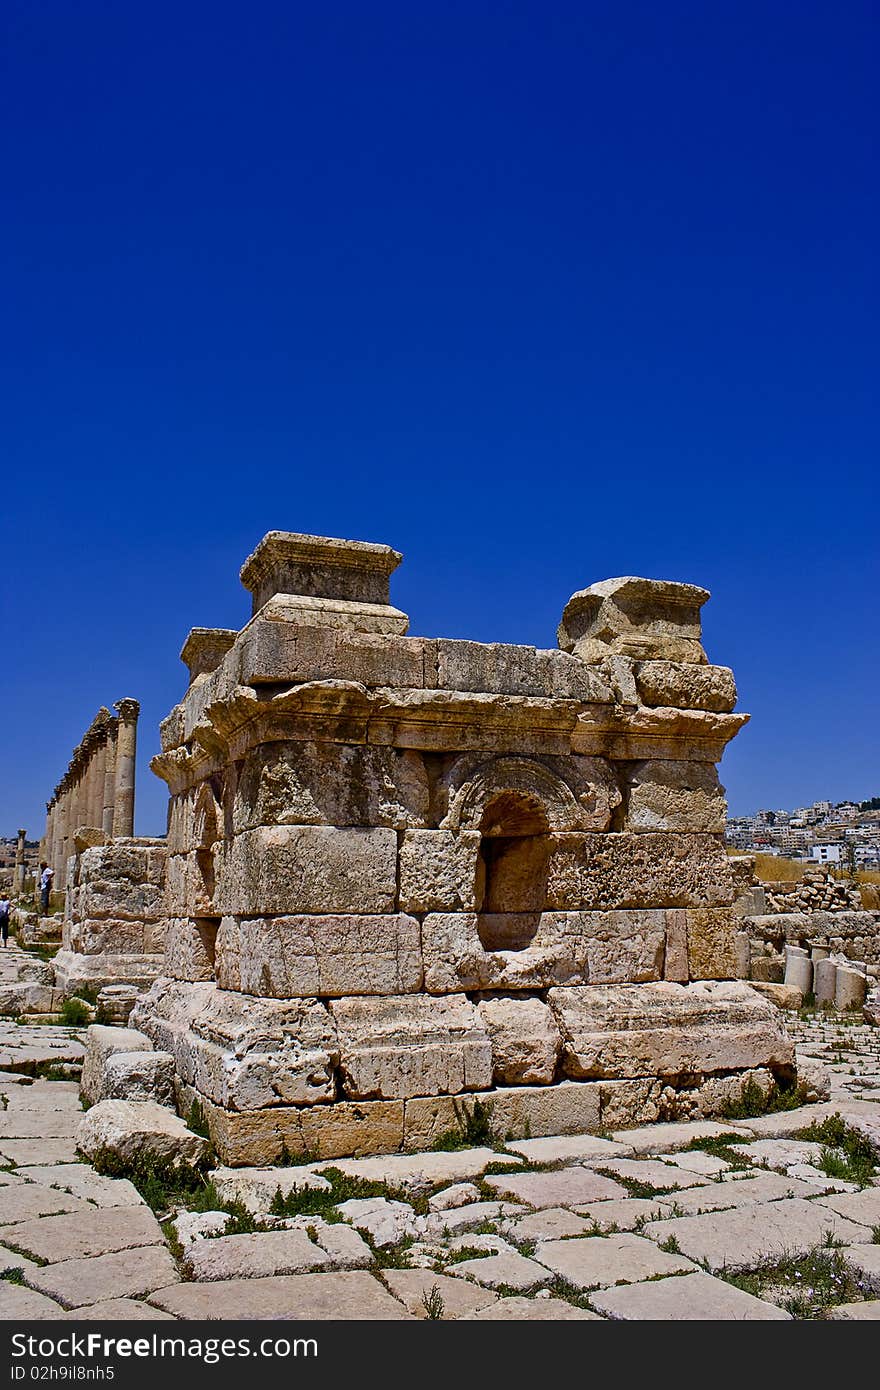 Photo of an Ancient Roman Altar at the ancient romancity located in Jerash - Jordan